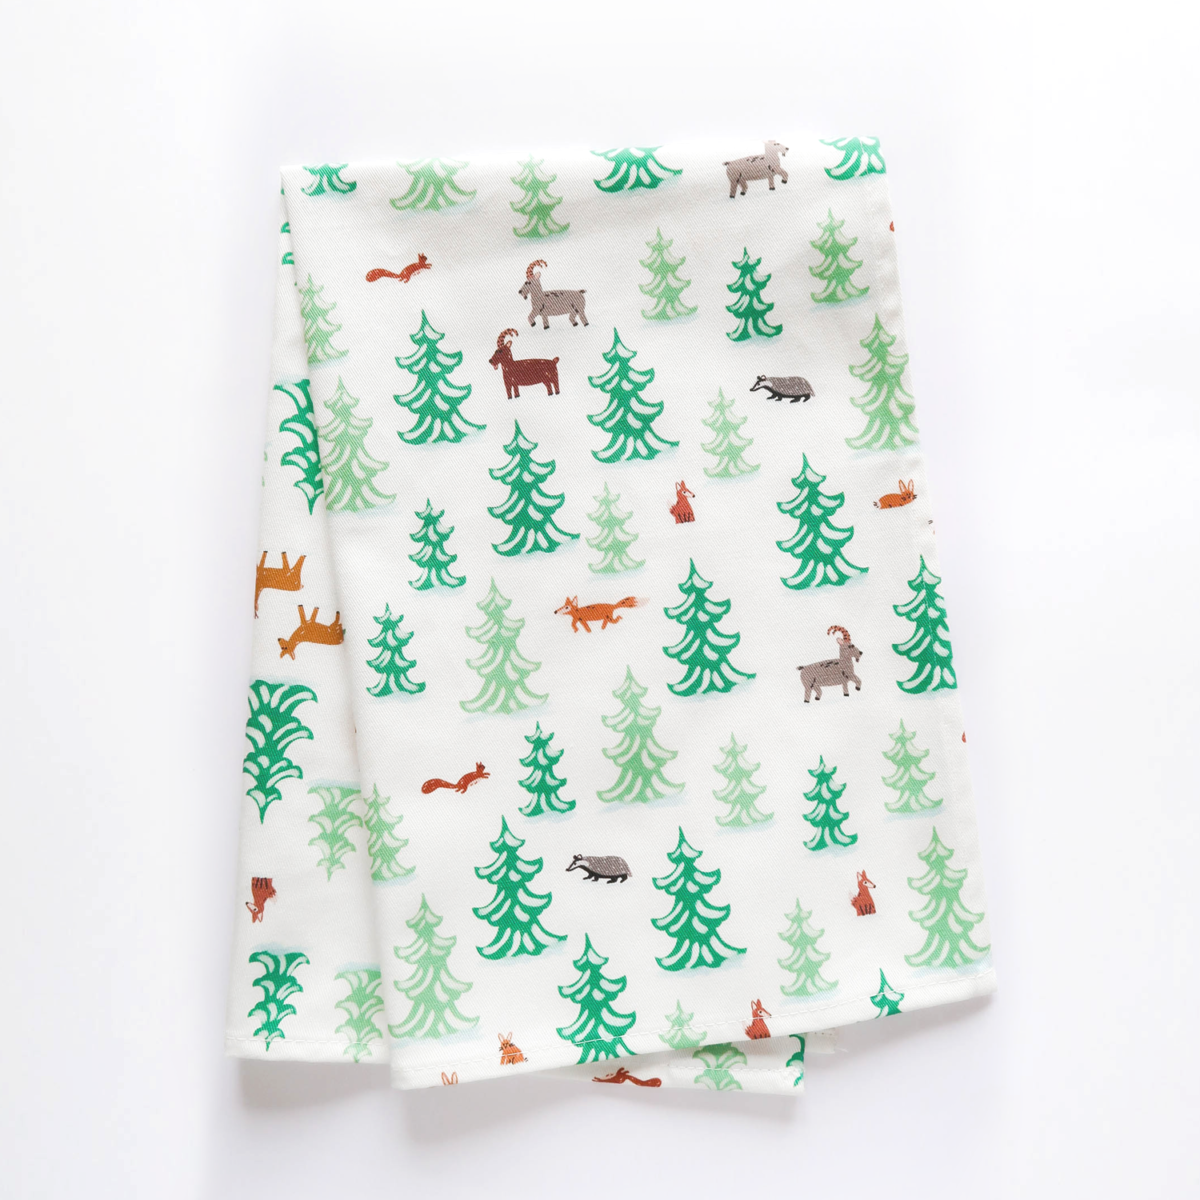 Tea towel forest packaging 02